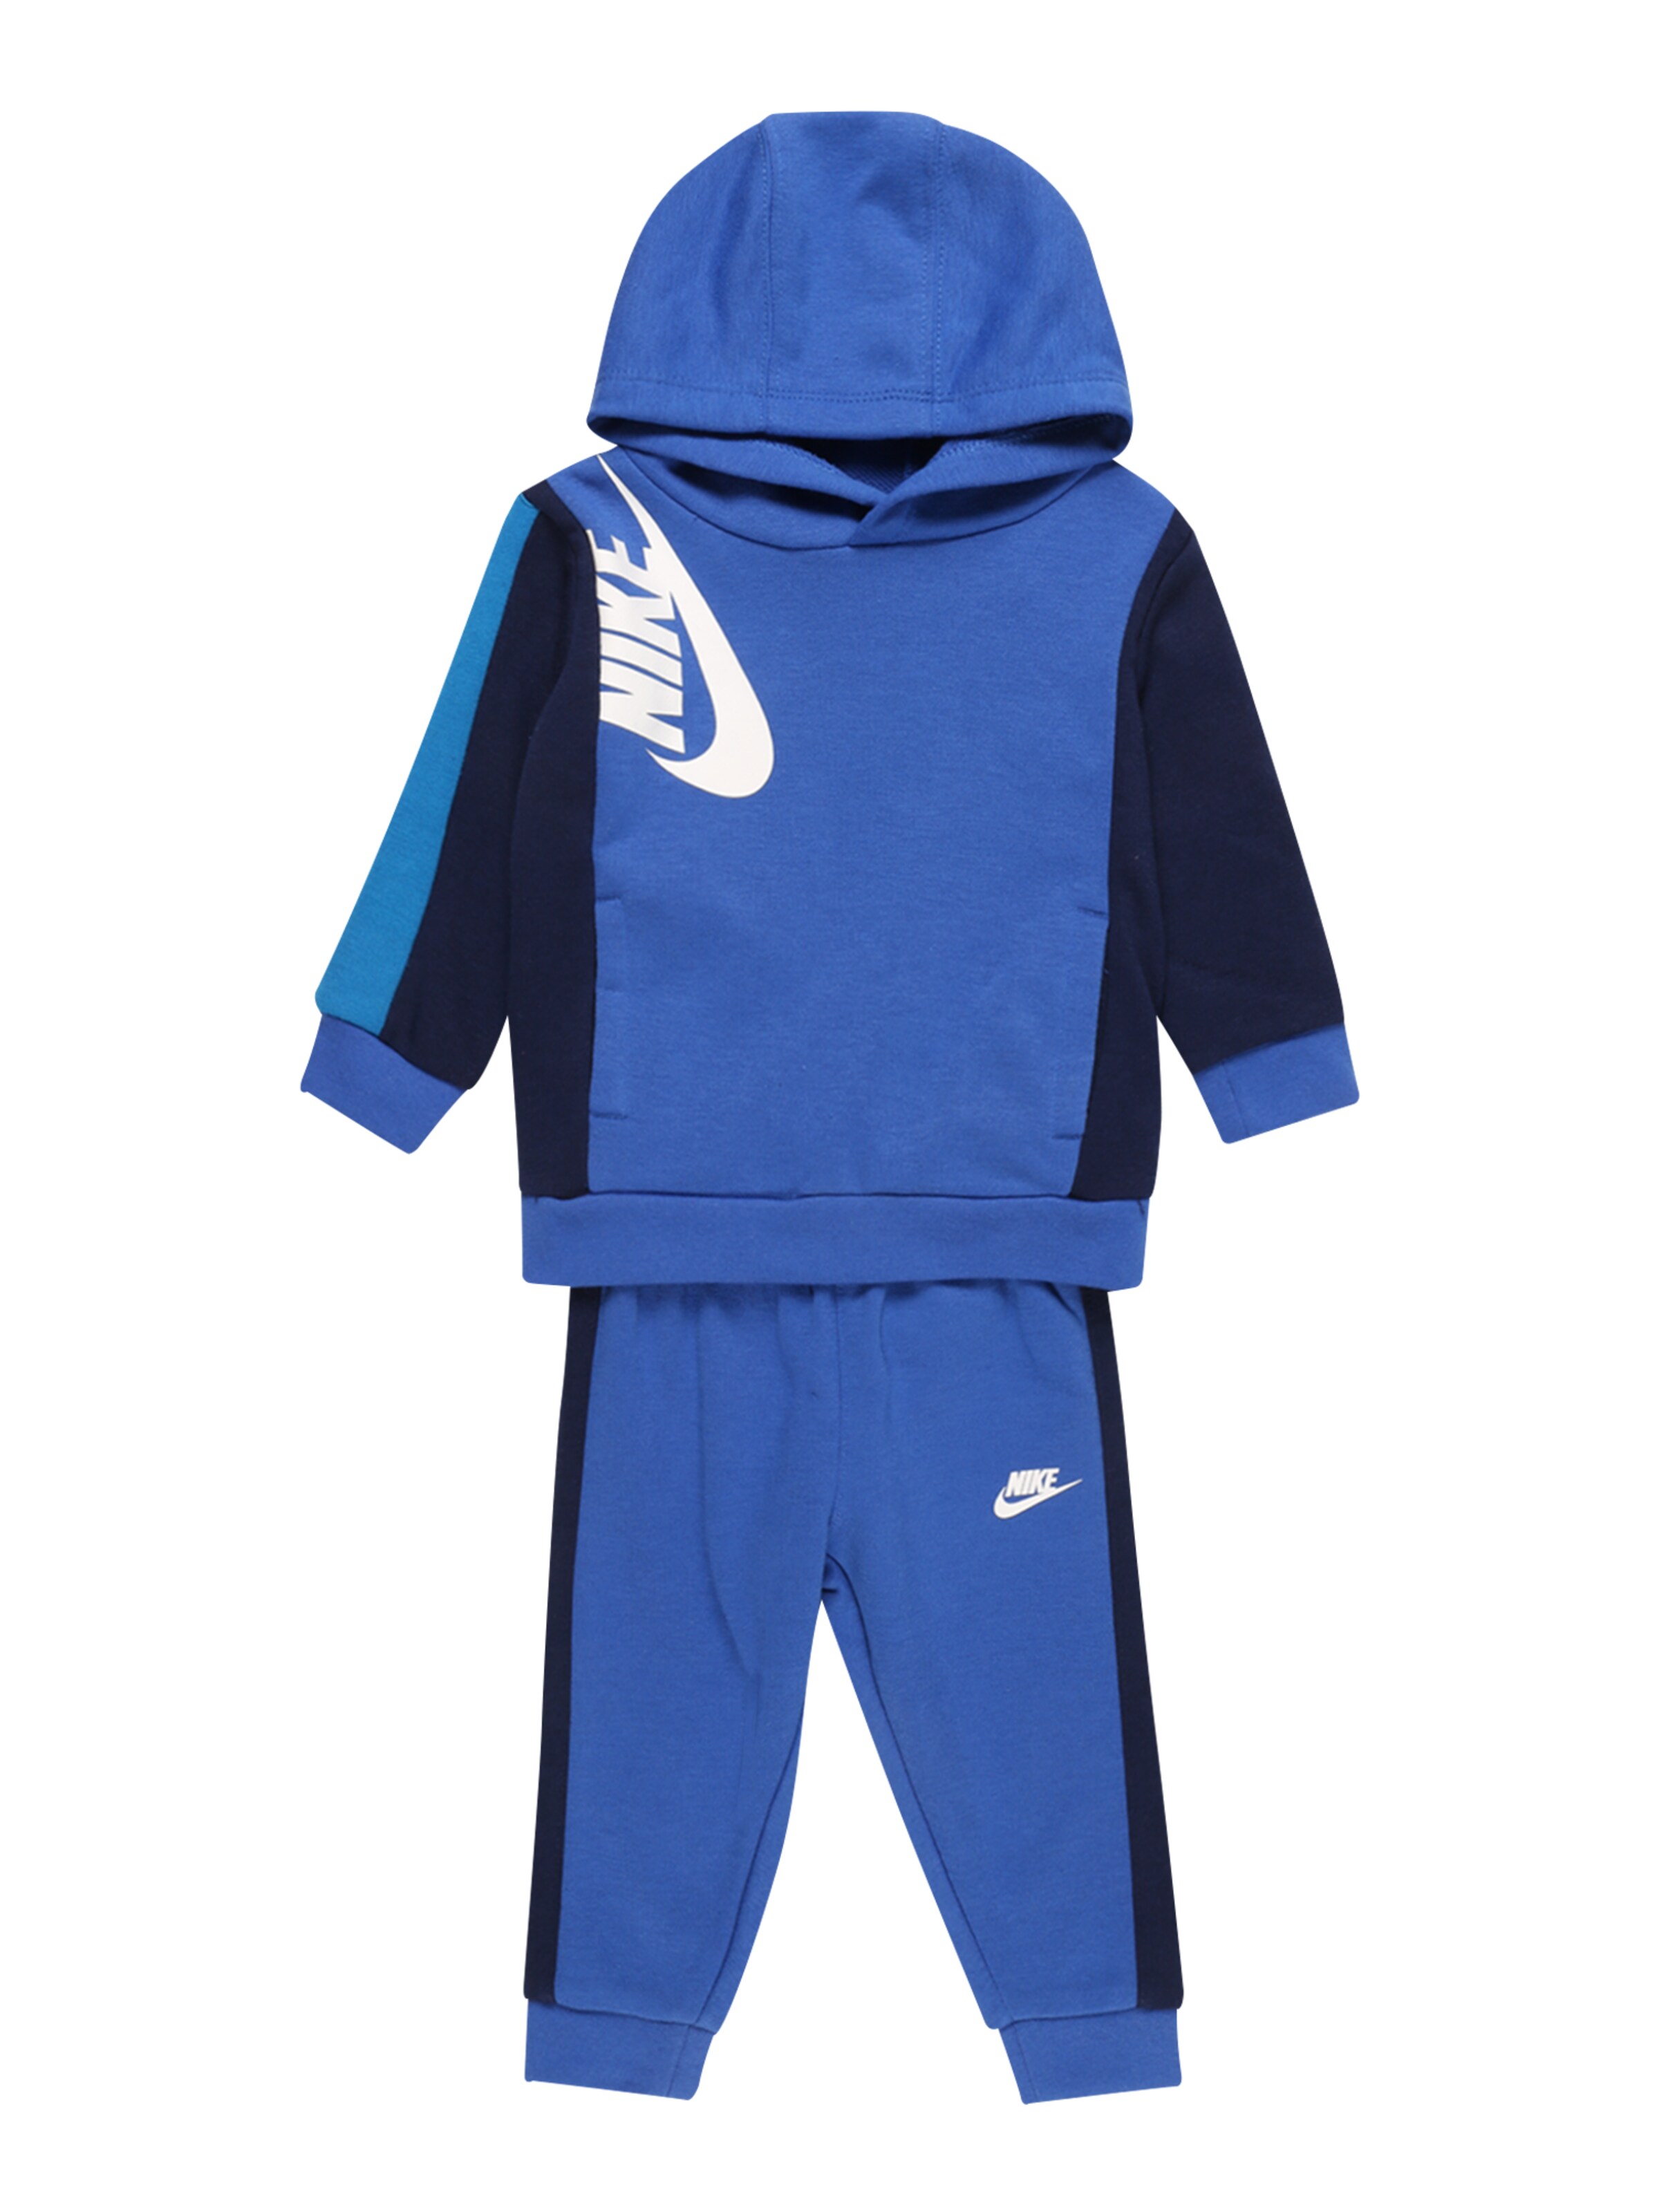 Garçon Survêtement Nike Sportswear en Bleu Roi, Bleu Nuit 